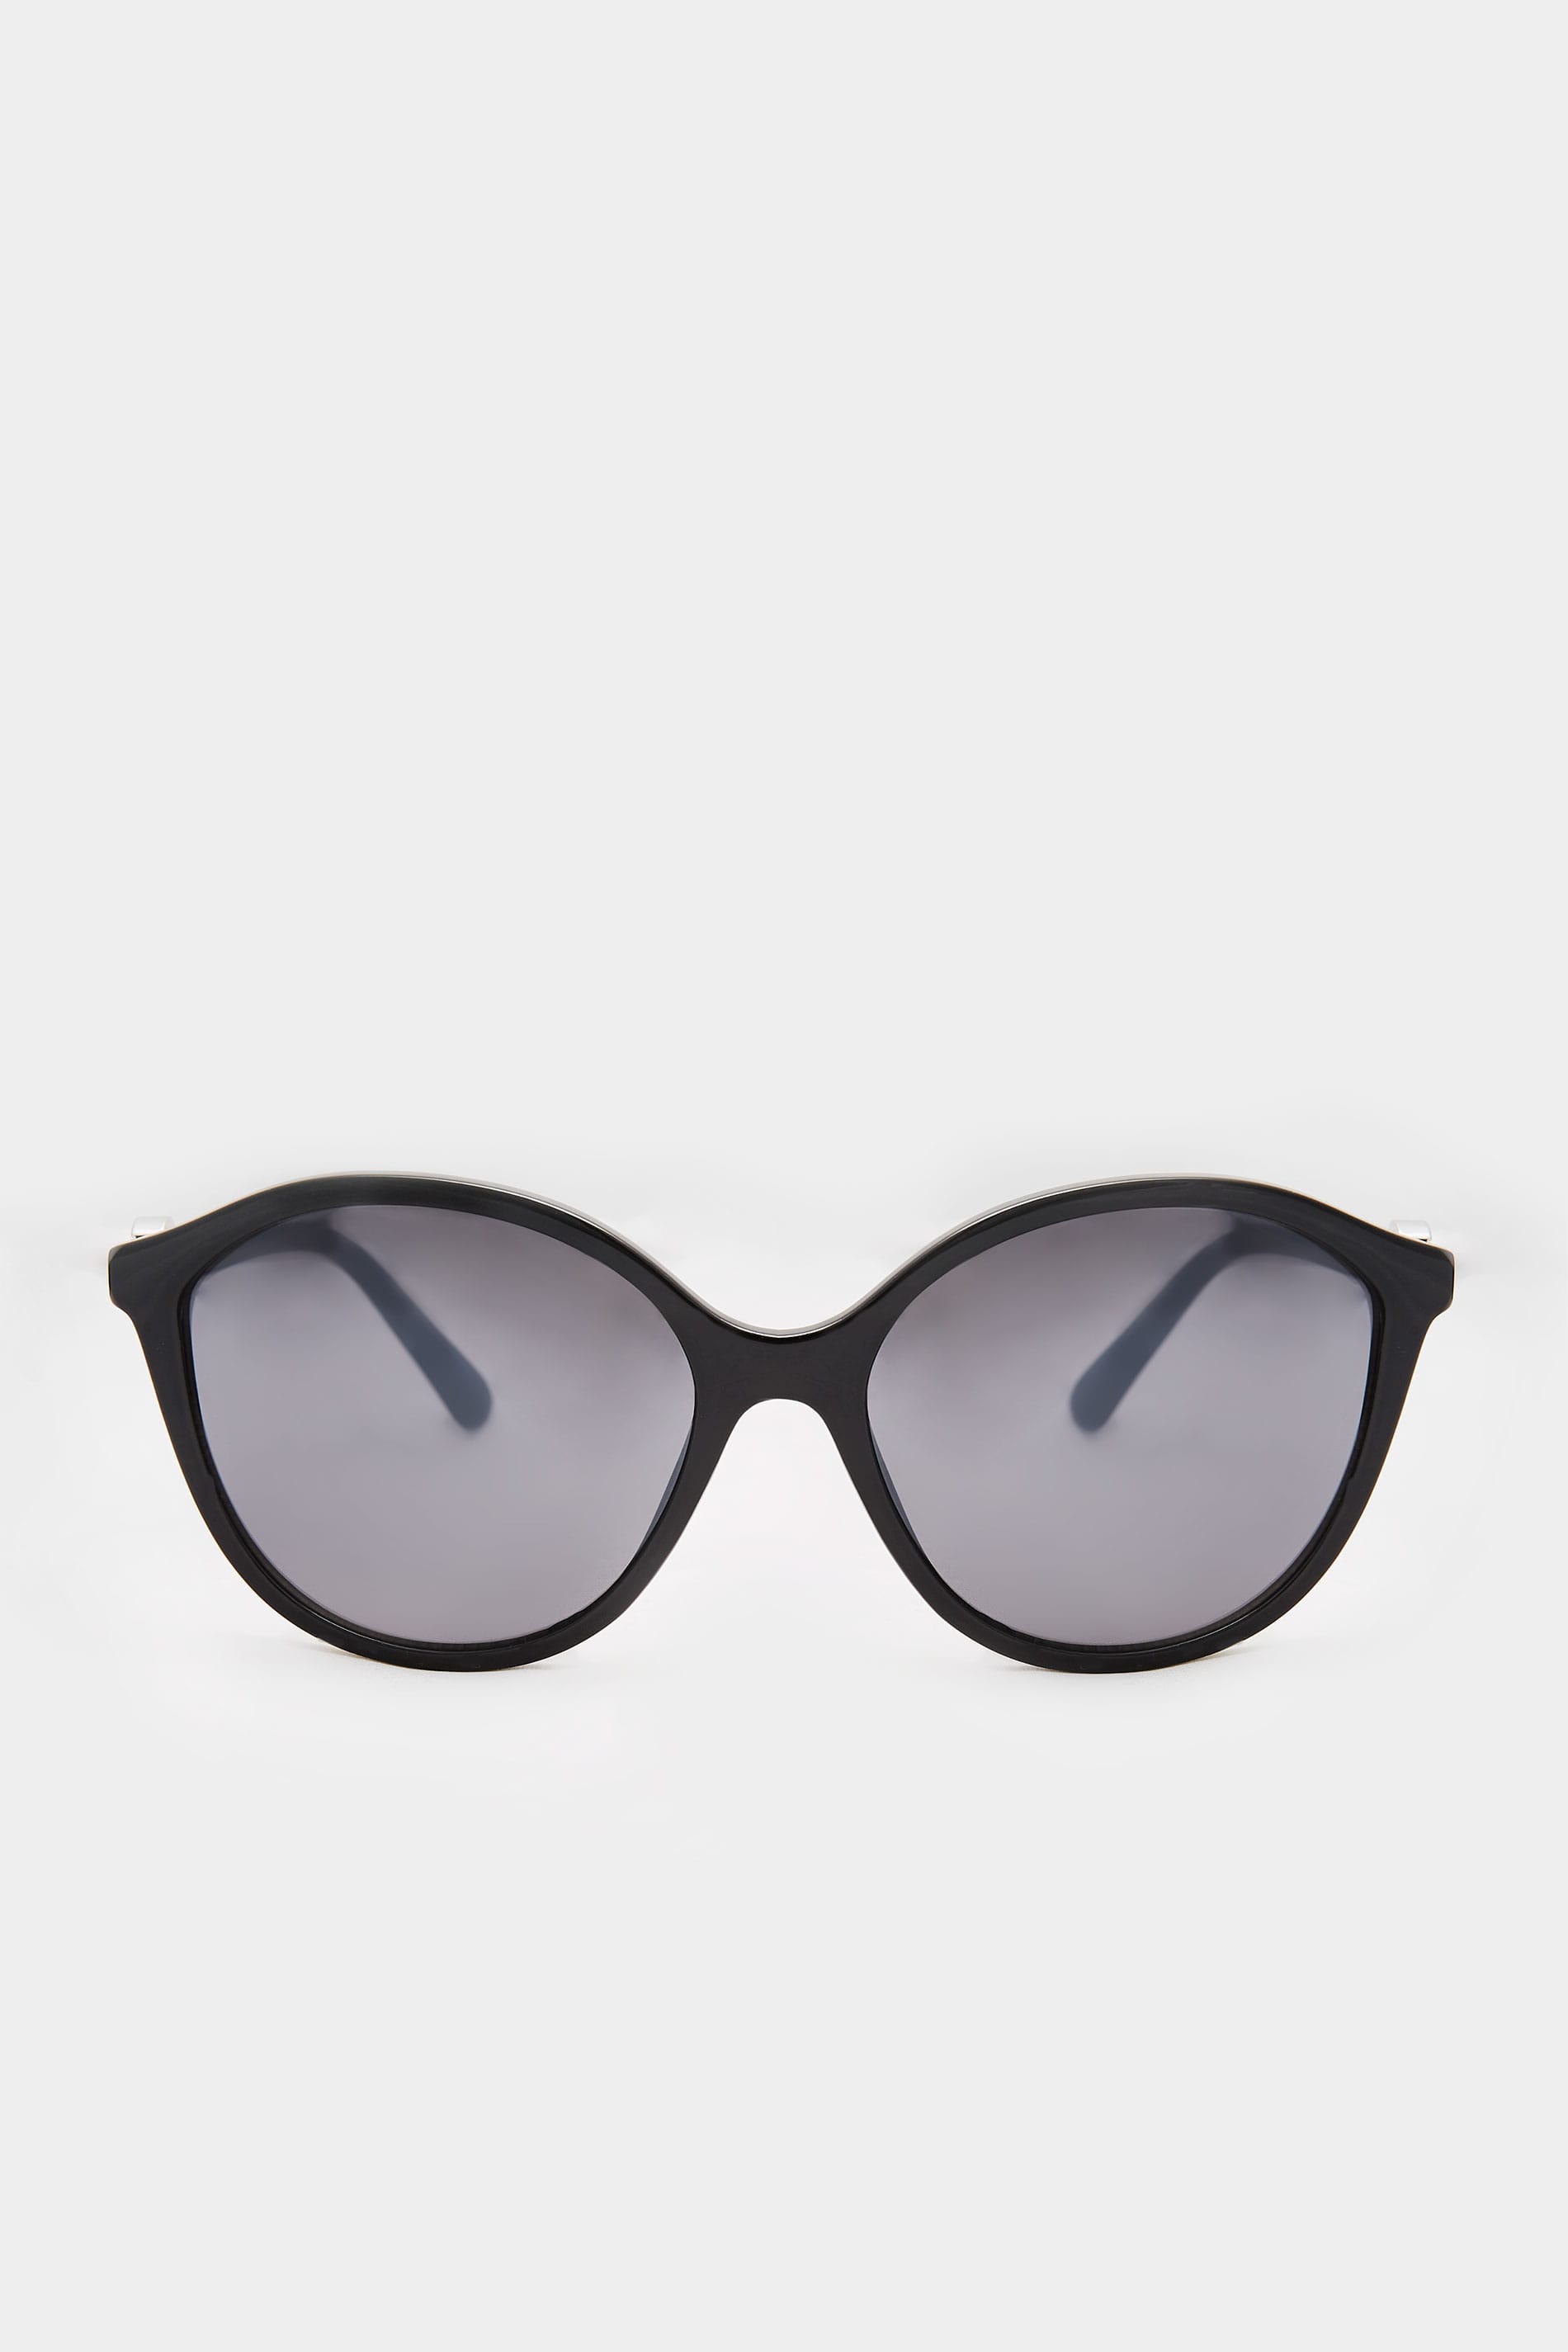 Black Rounded Cat-Eye Sunglasses | Yours Clothing 3